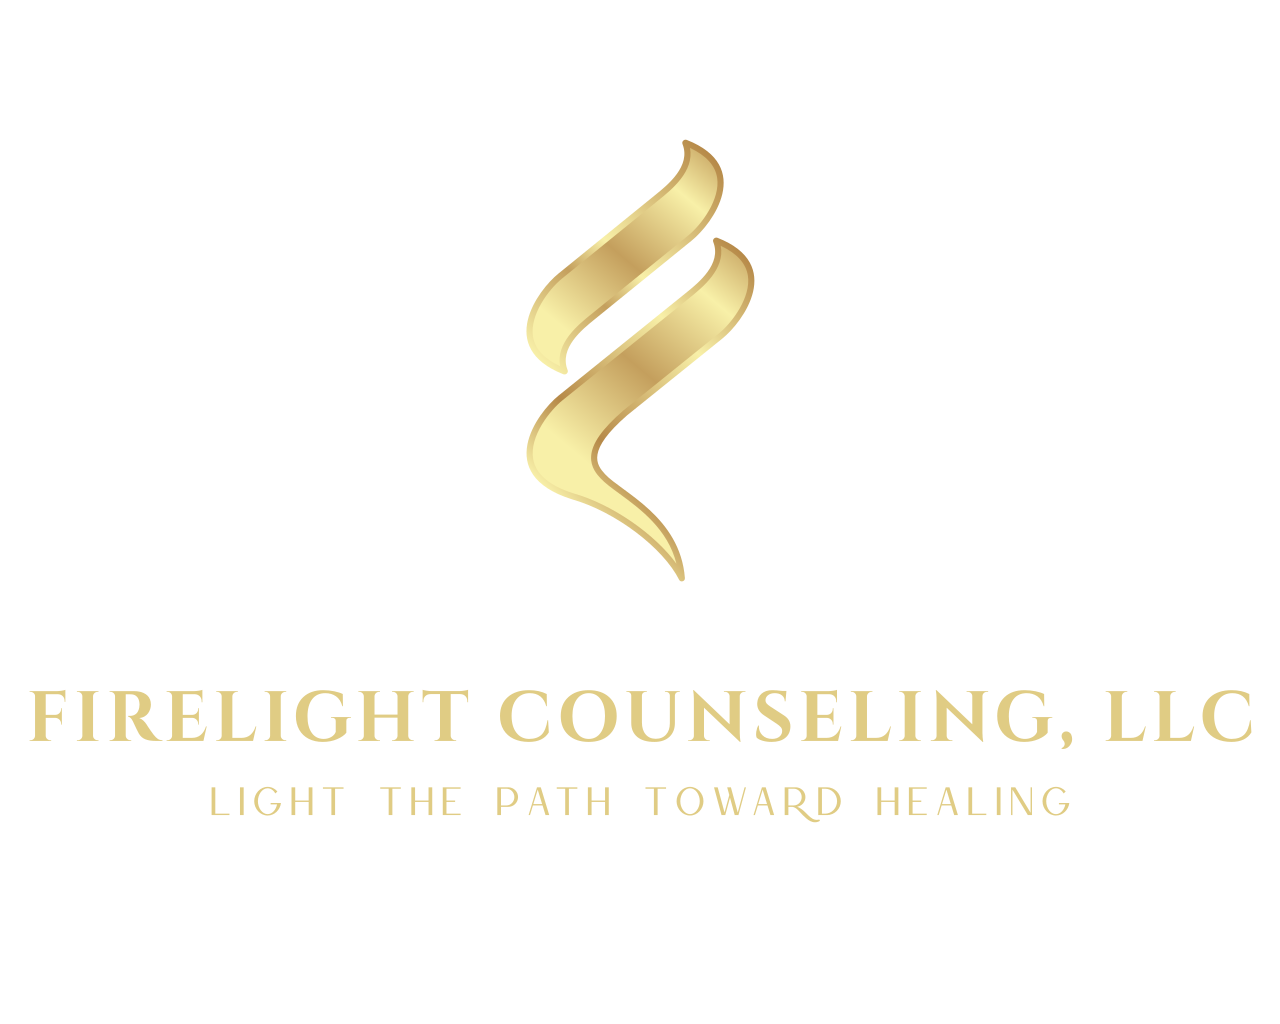 Firelight Counseling, LLC